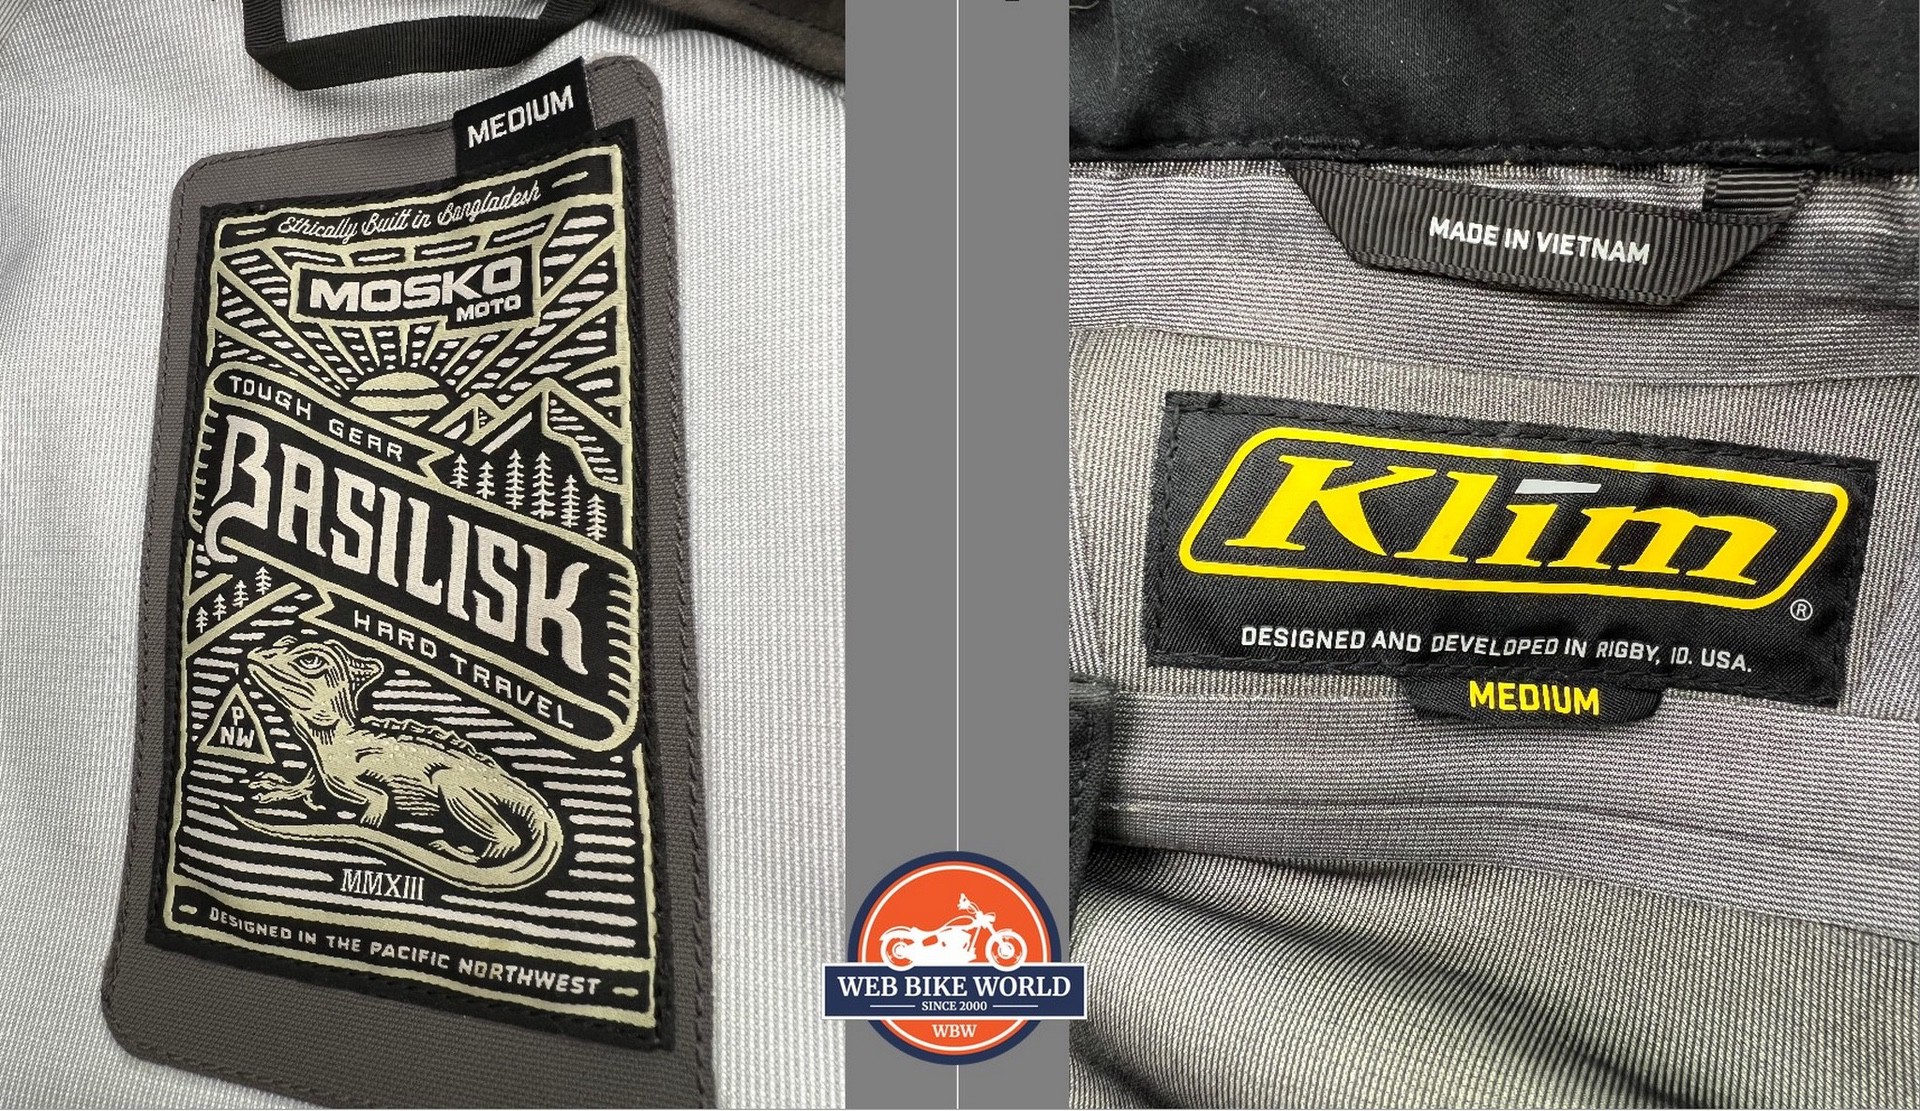 The tags found inside the Klim Raptor GTX jacket and the Mosko Moto Basilisk jacket.